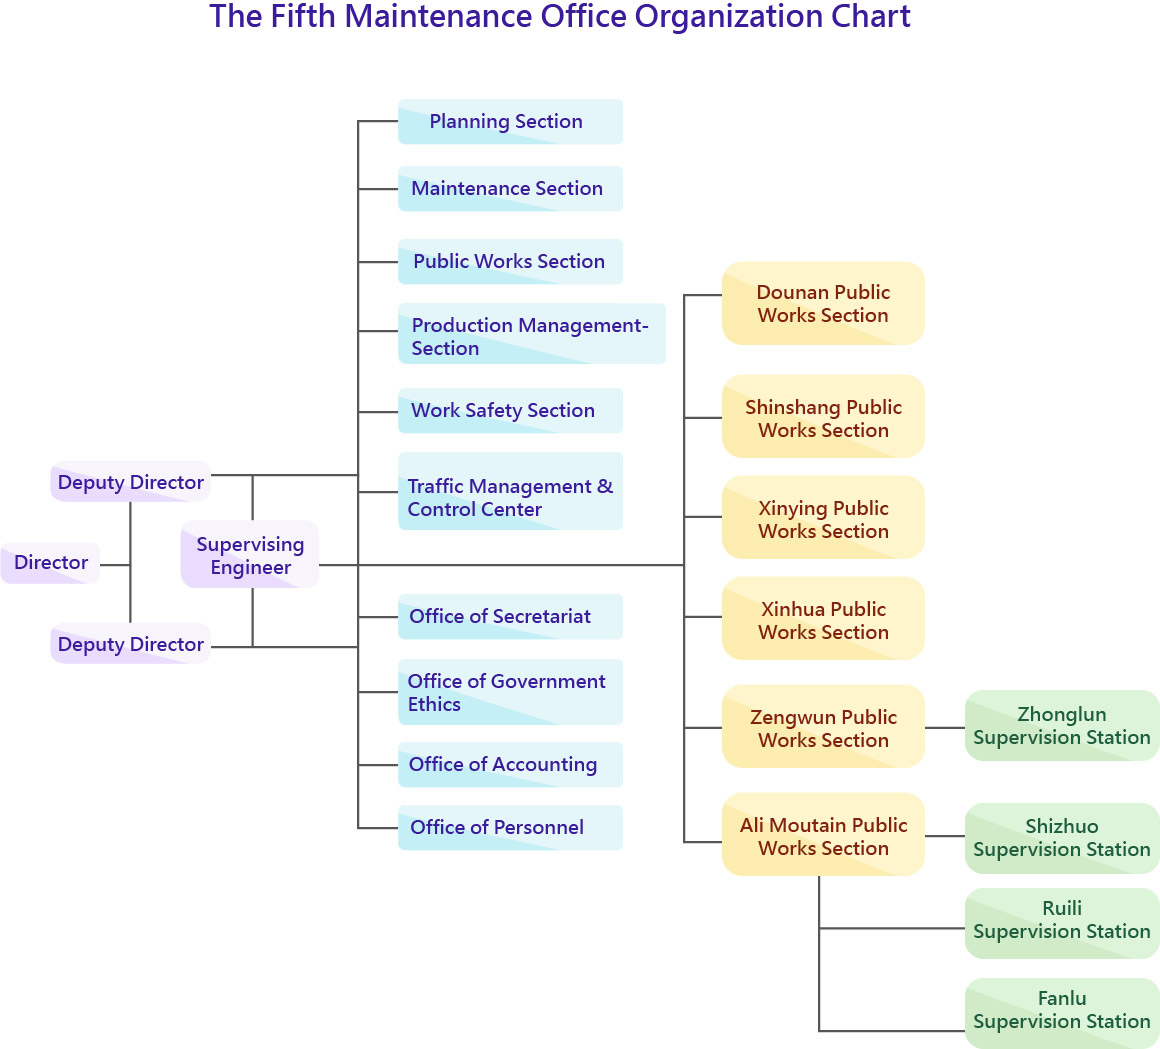 The Fifth Maintenance Office-Organization Chart